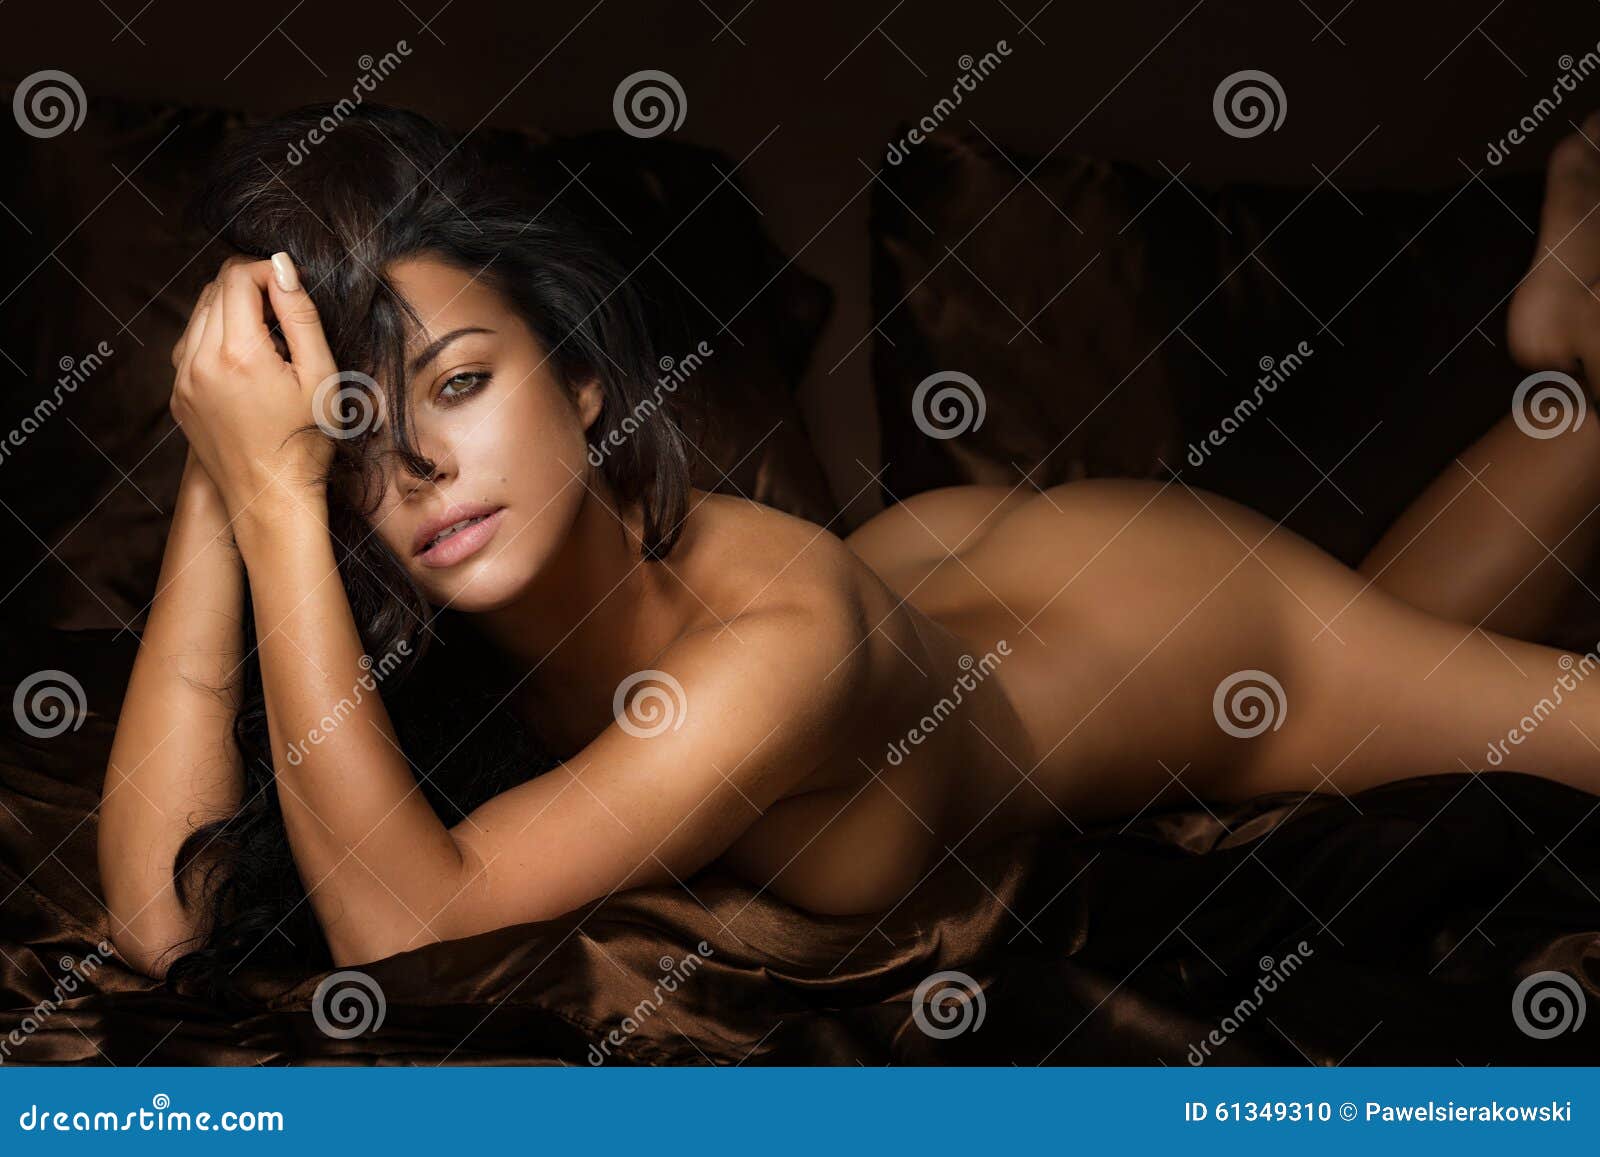 bailee casey share sexy naked brunette women photos